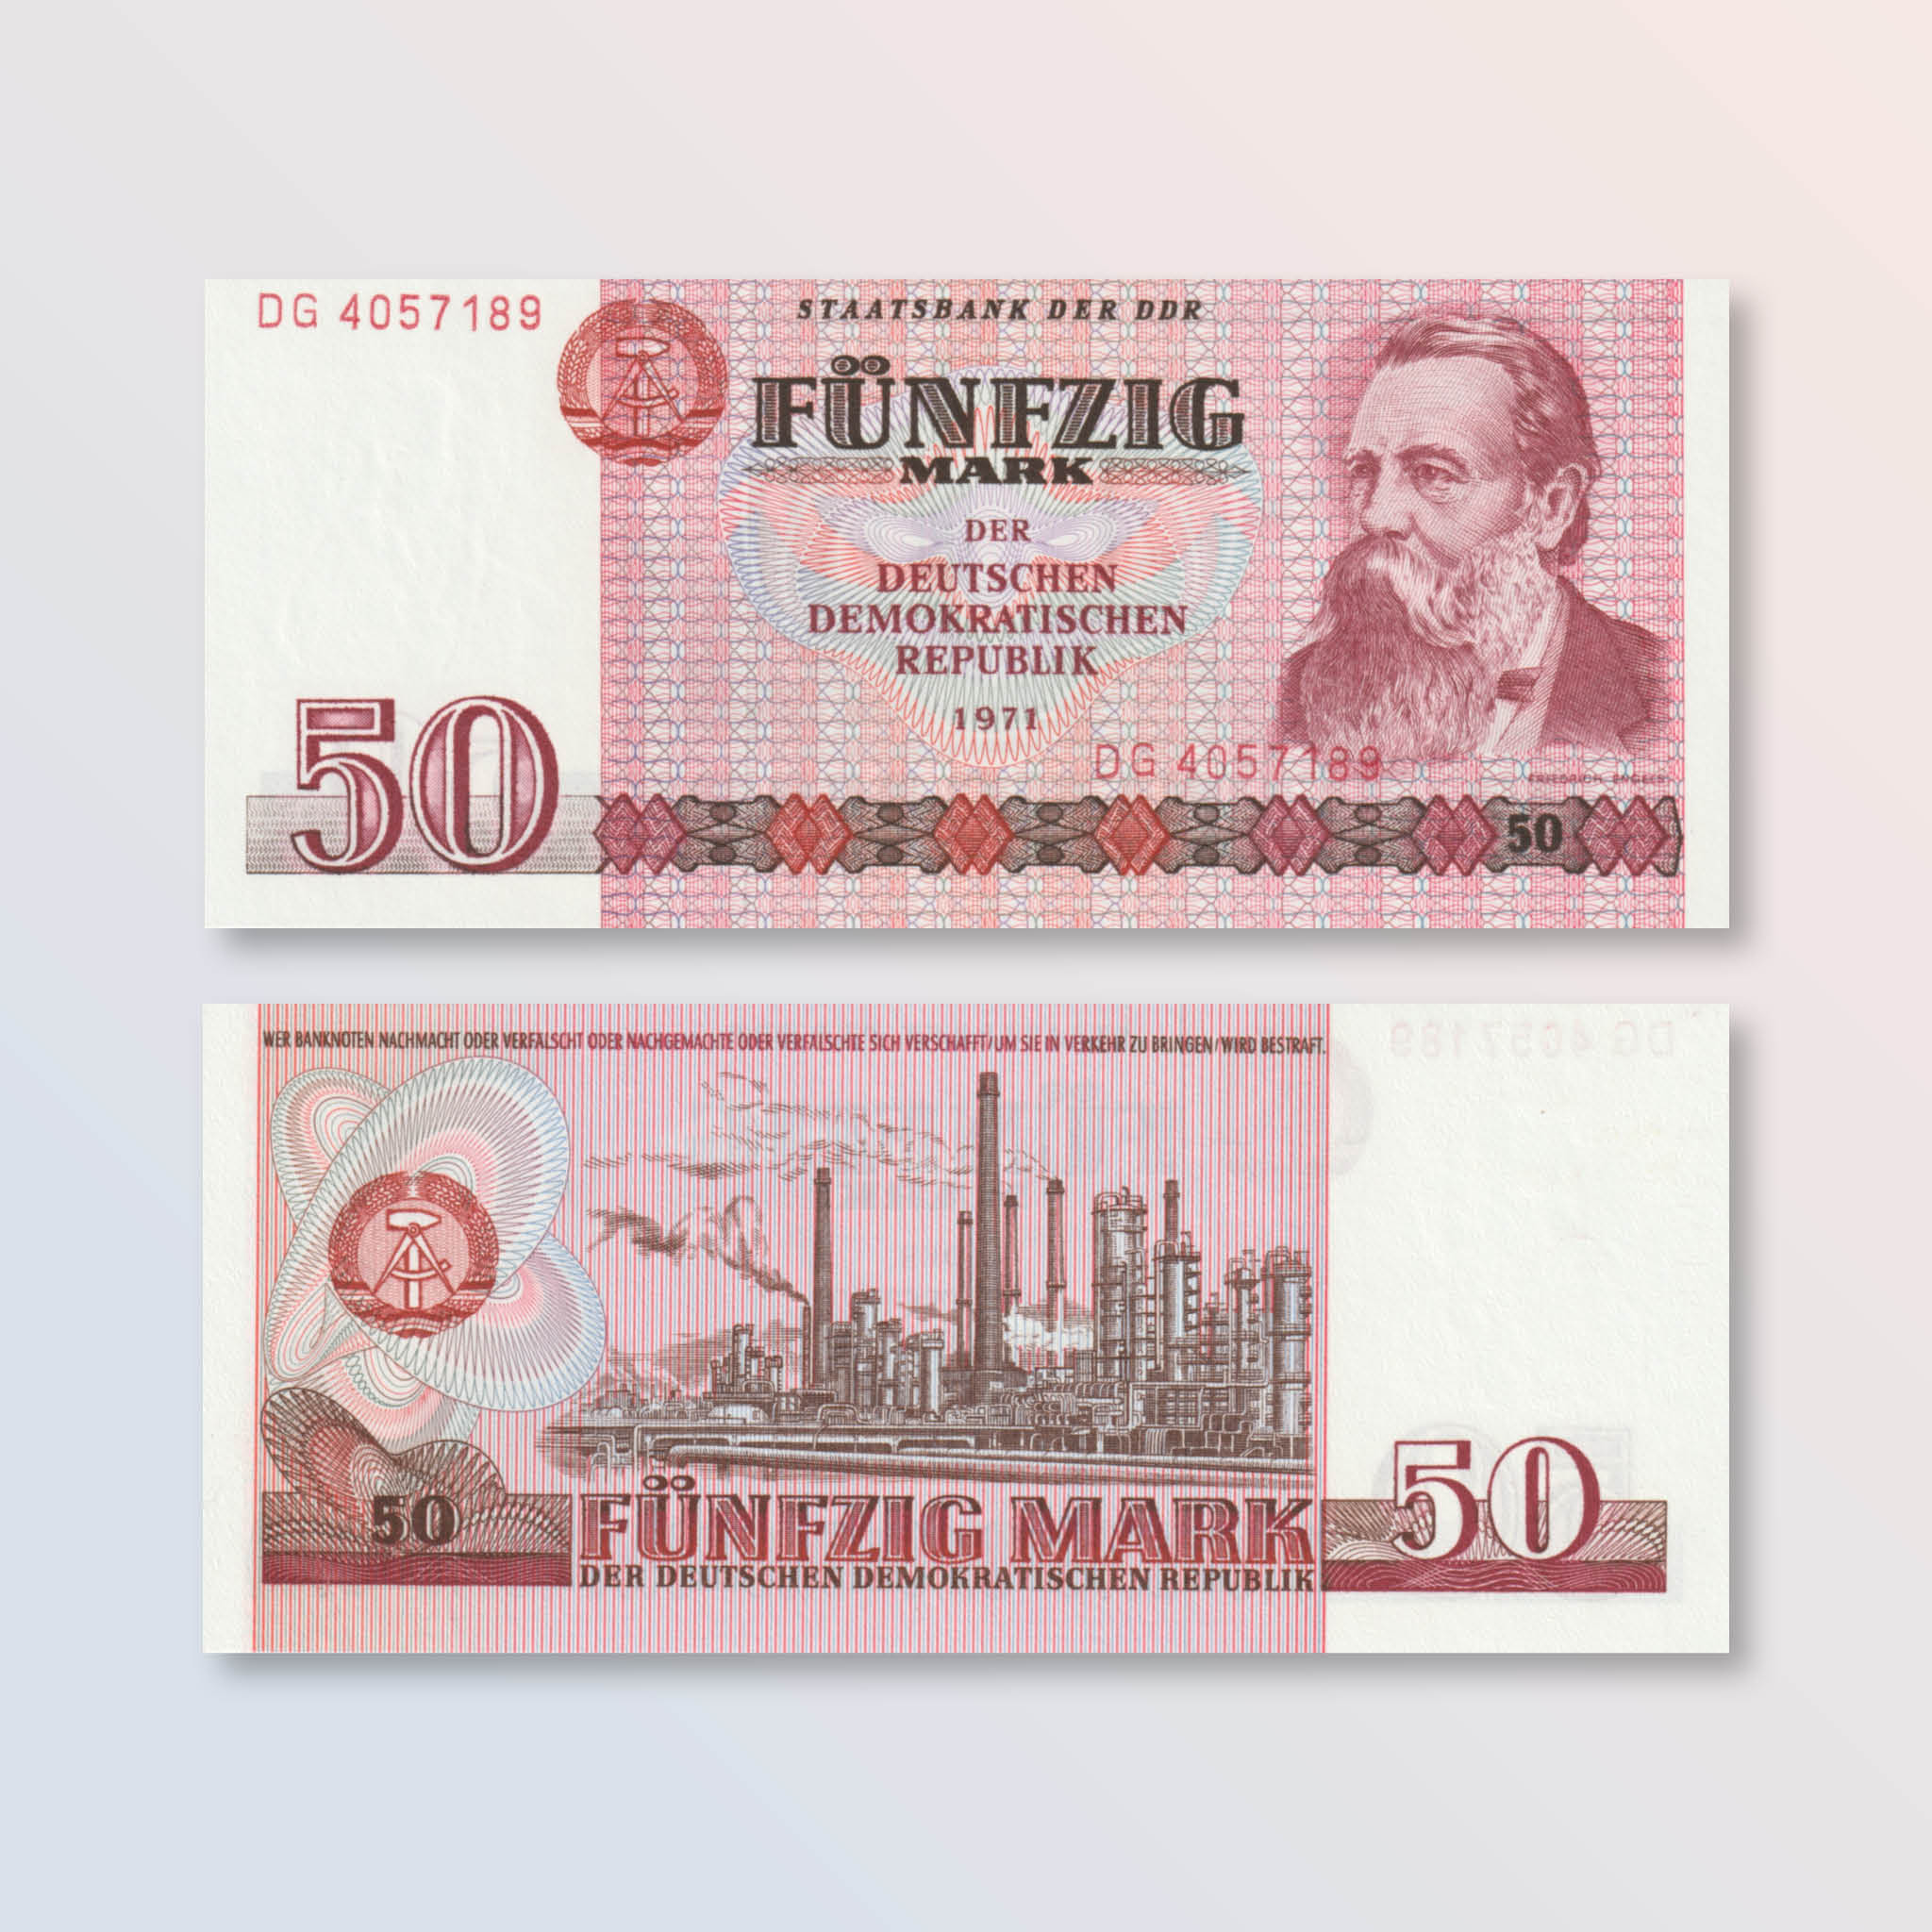 German Democratic Republic 50 Marks, 1971, B304a, P30a, UNC - Robert's World Money - World Banknotes